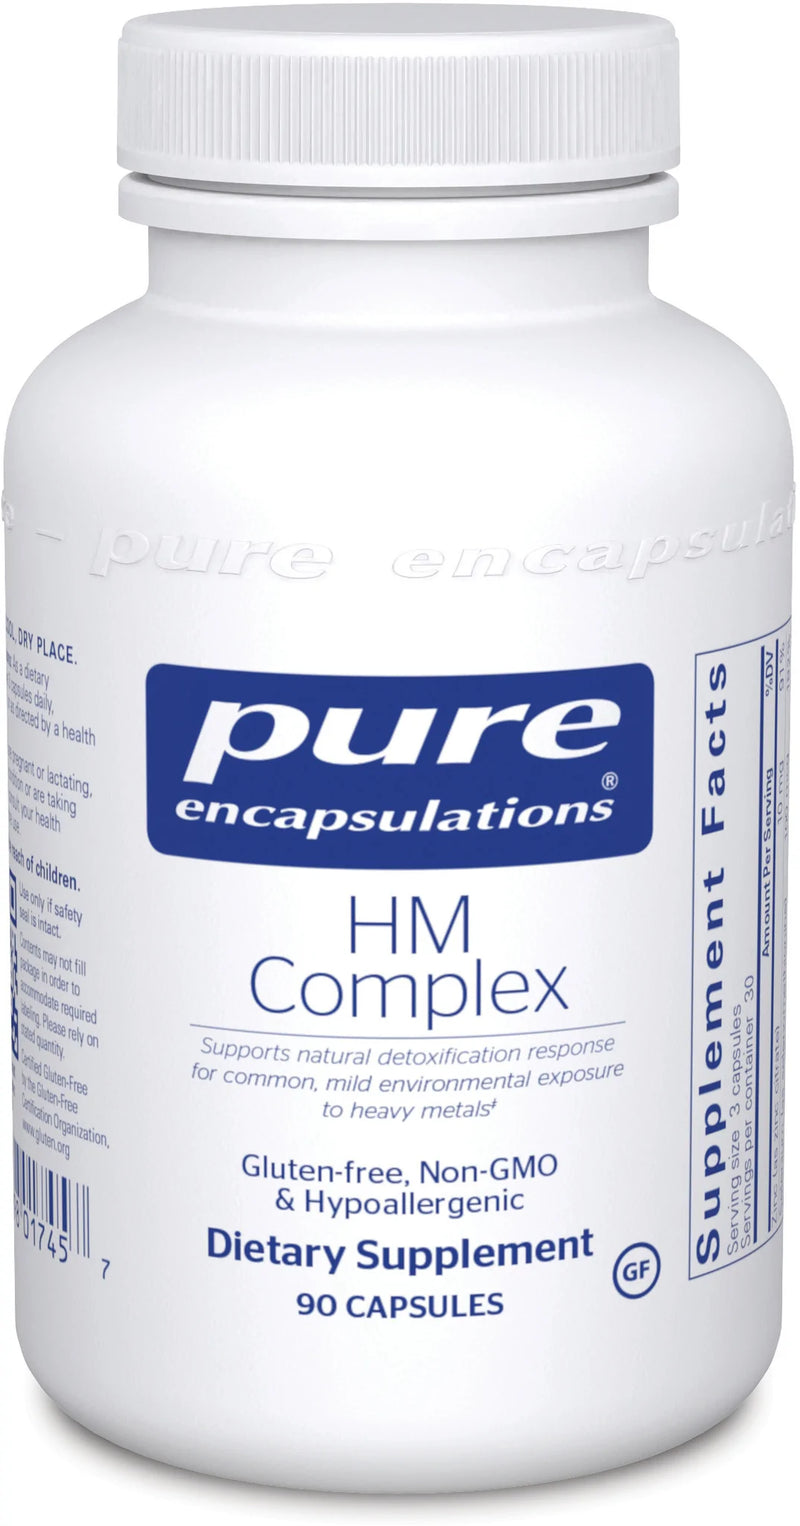 HM Complex by Pure Encapsulations®